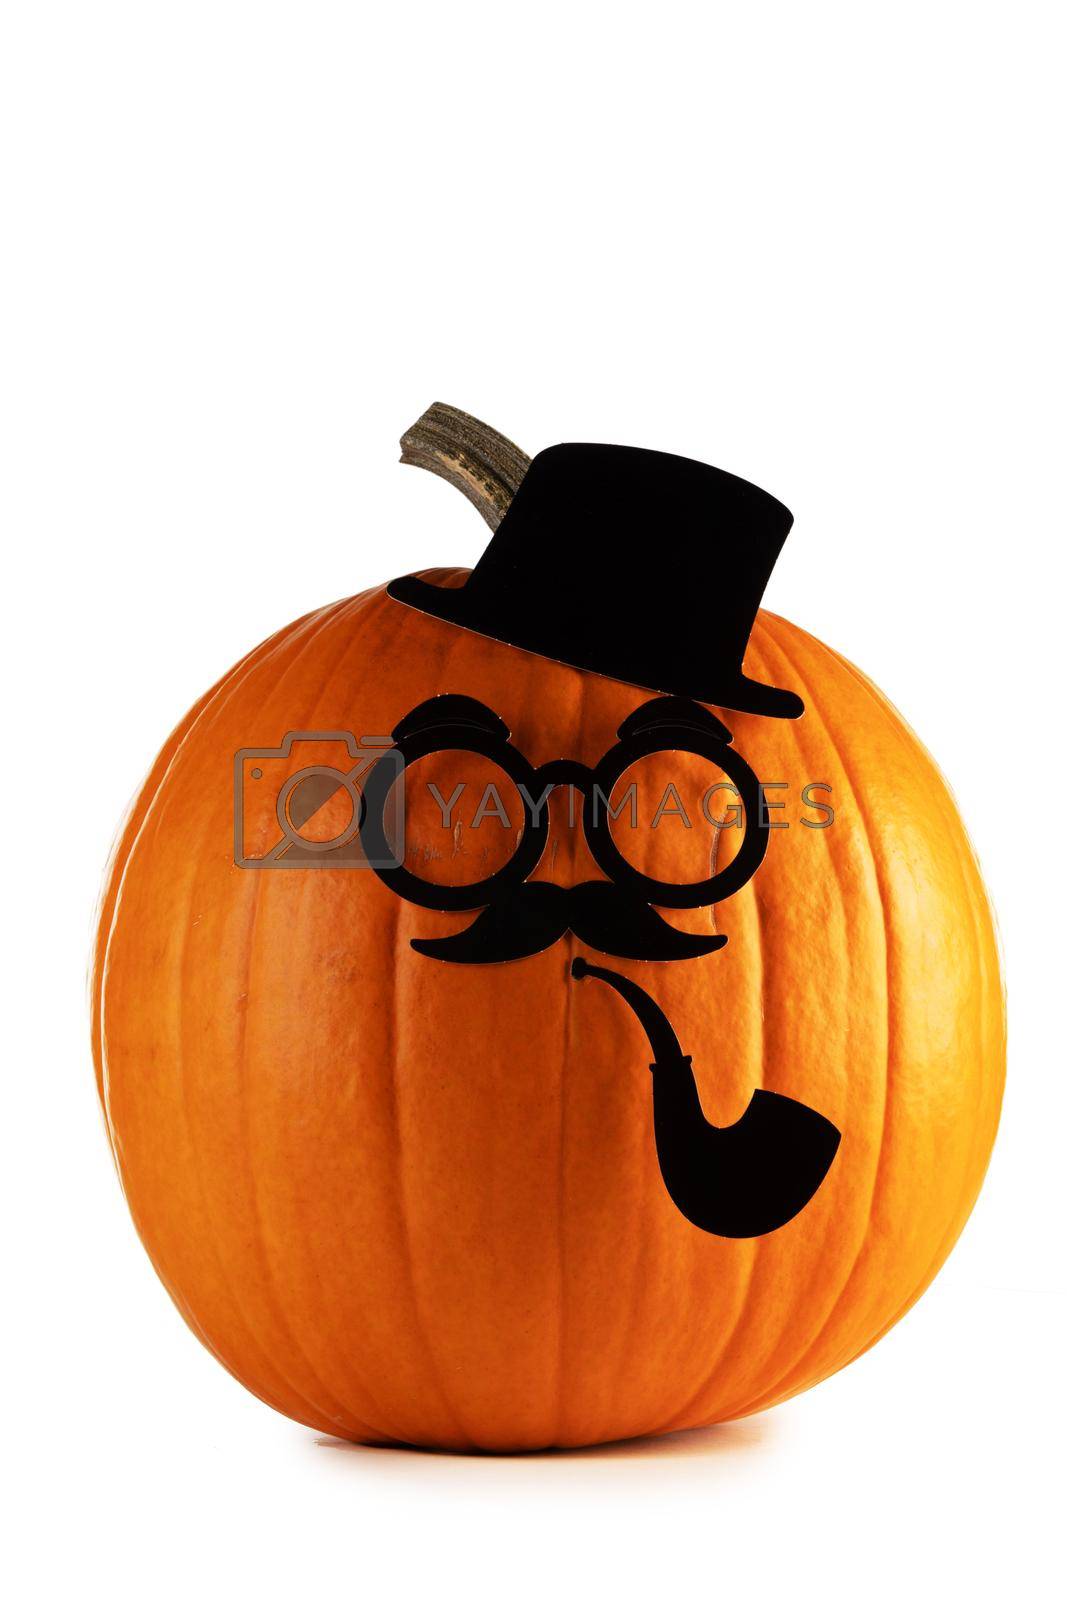 Royalty free image of Pumpkin gentleman on Halloween by Yellowj